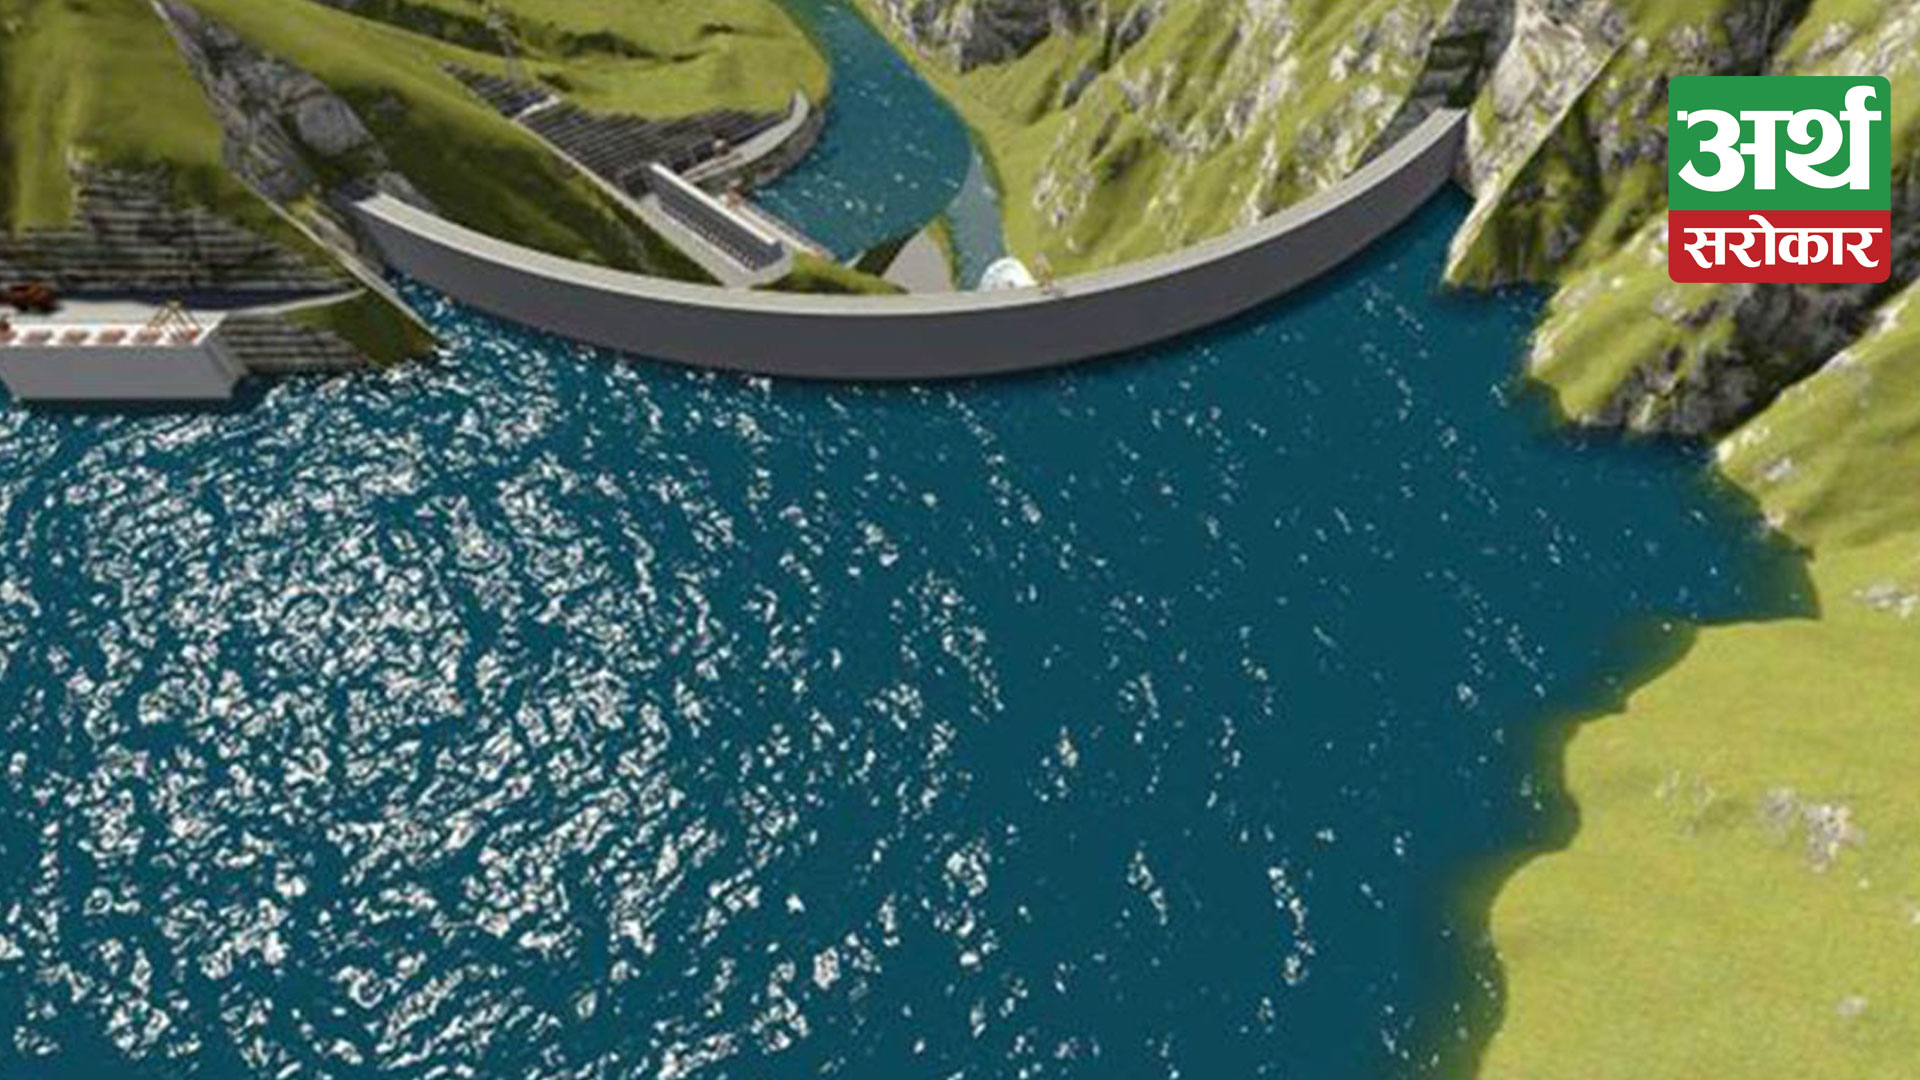 Budhigandaki Hydropower Public Ltd Company set up raising hopes for project’s progress